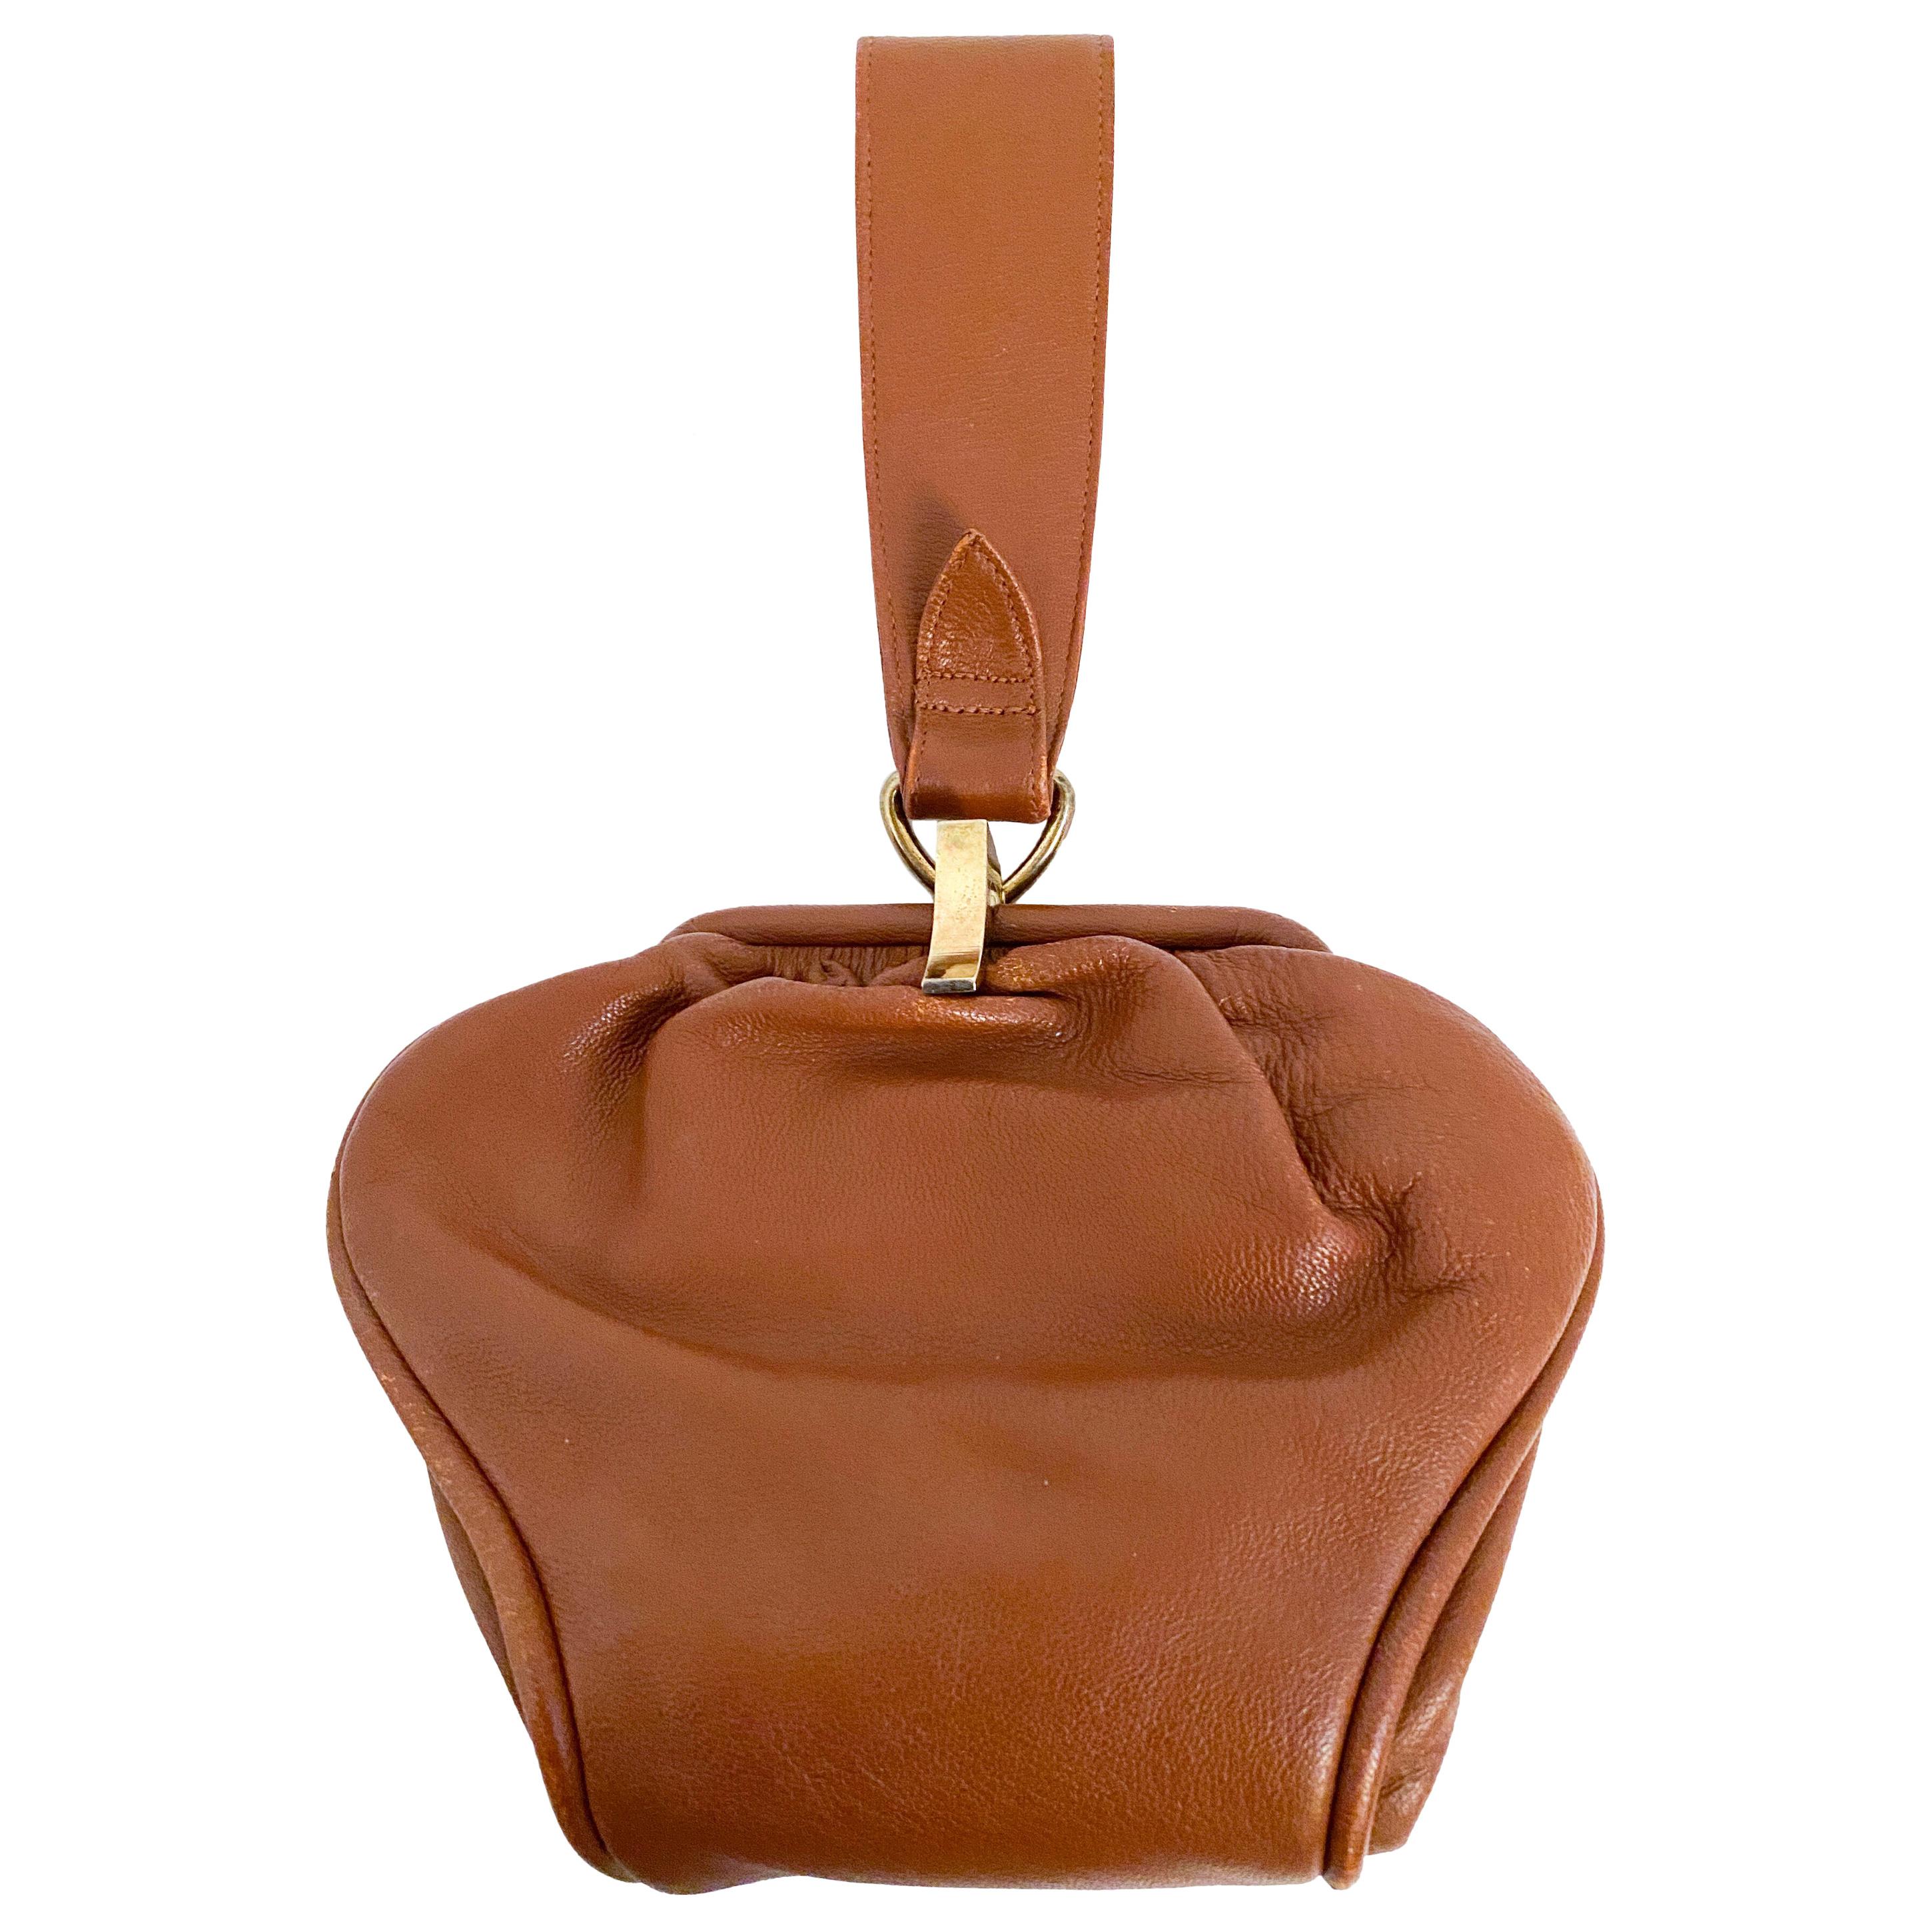 1930s Art Deco Brown Leather Handbag with Wrist Strap